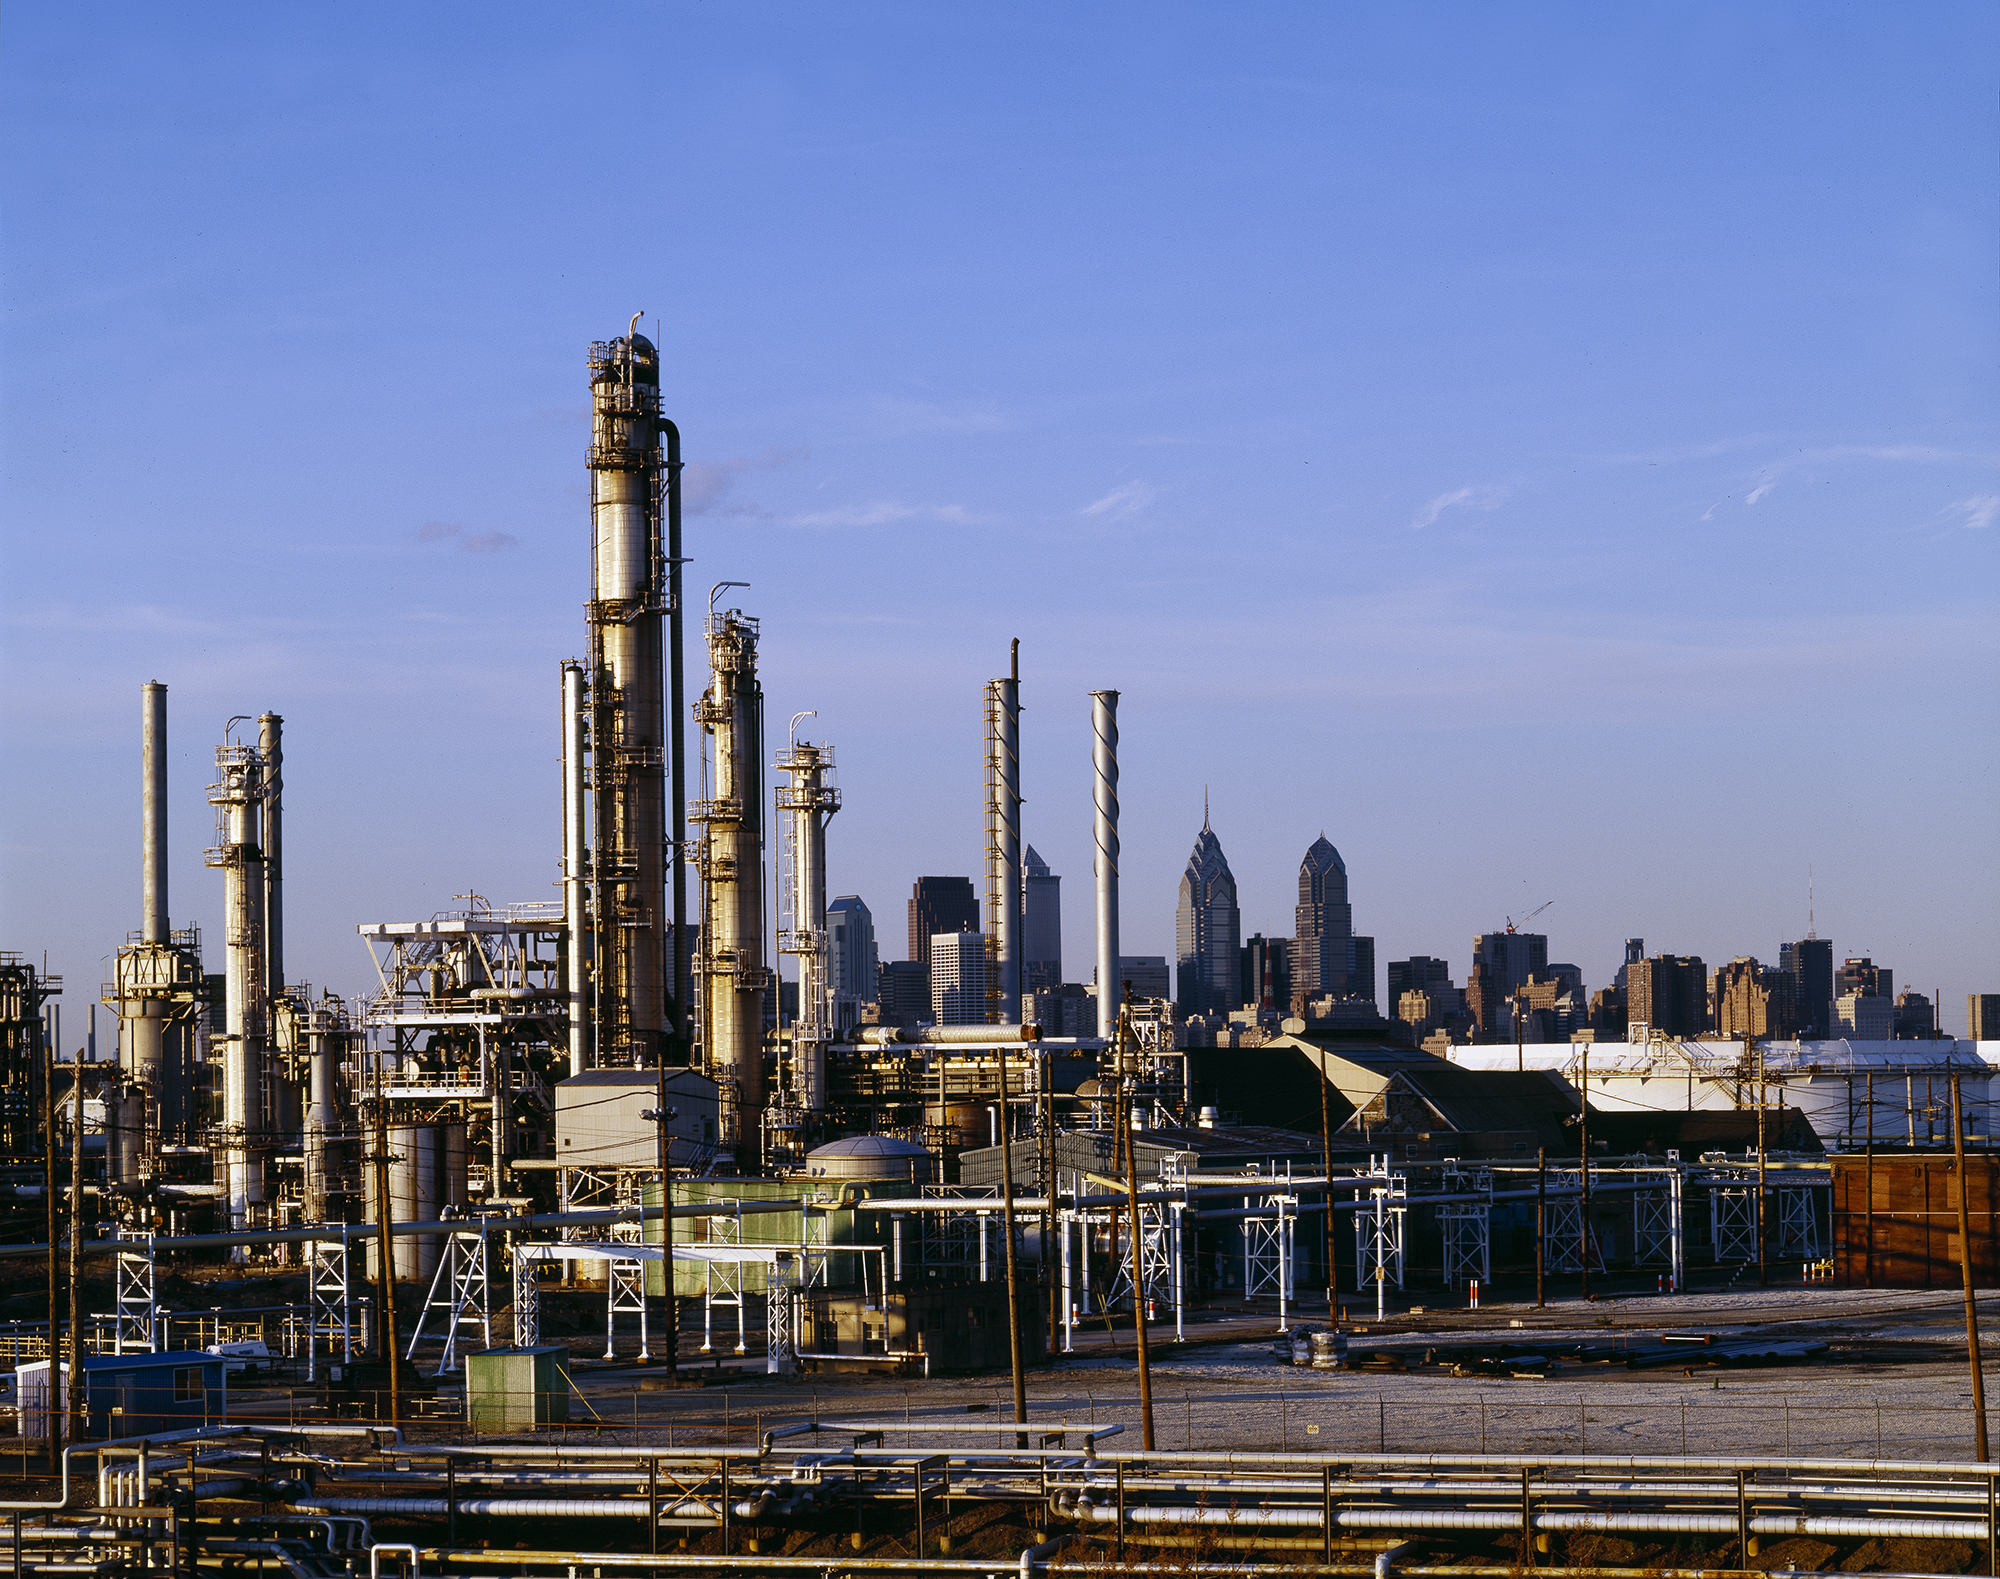 Philadelphia refinery in the daylight